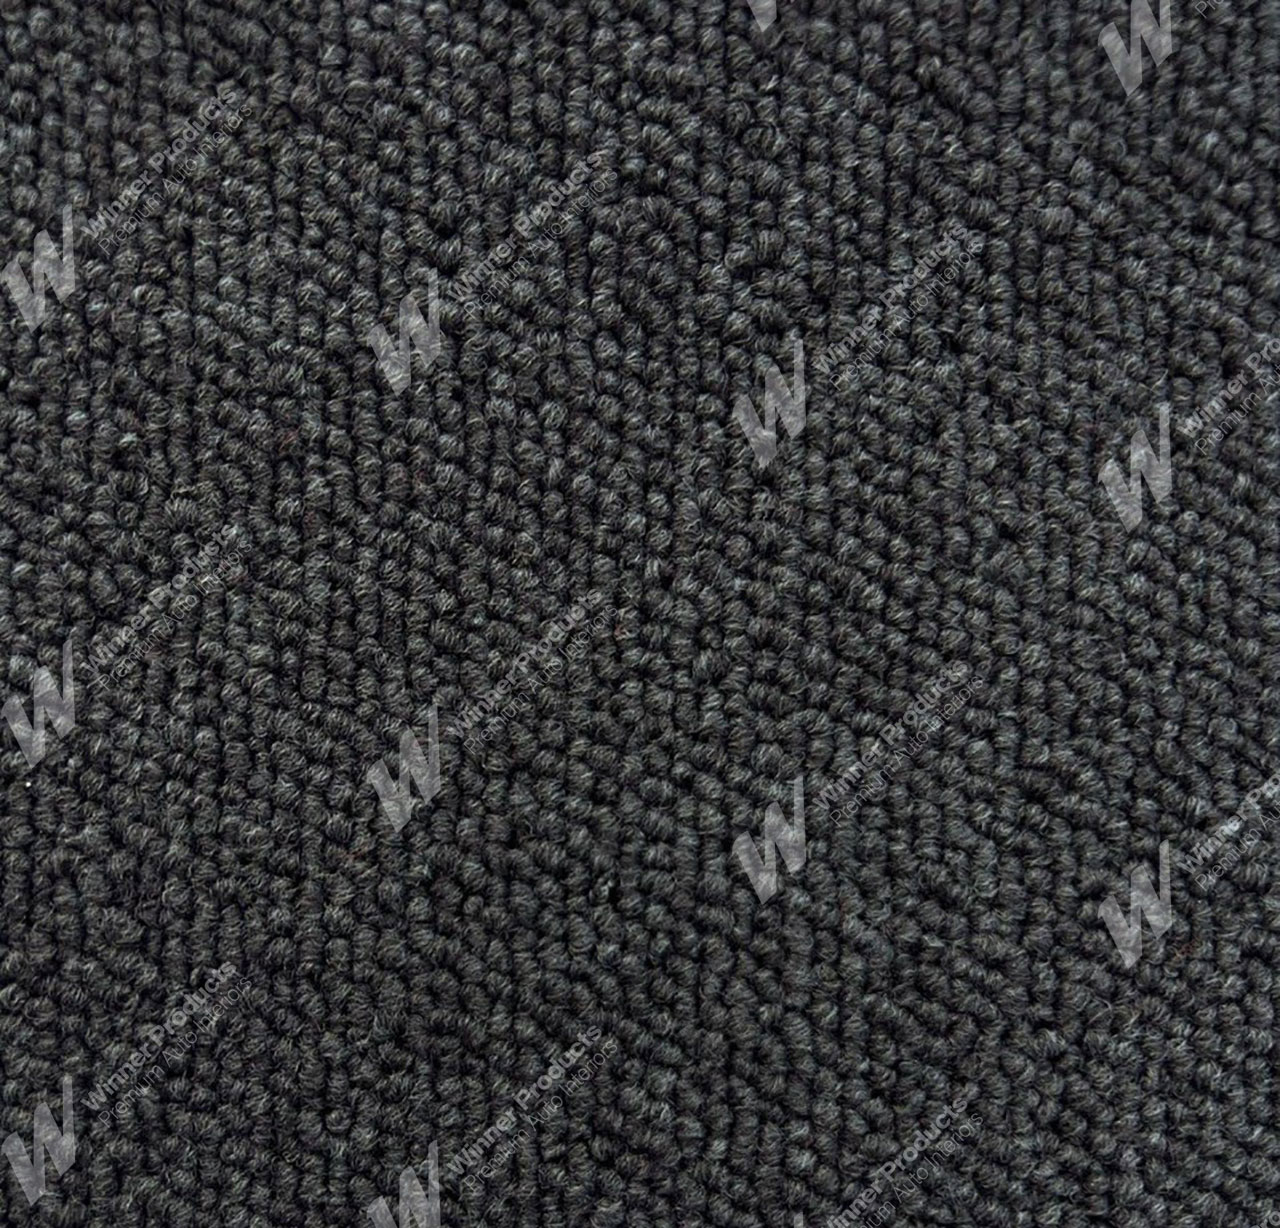 Holden Standard EJ Standard Ute B73 Elephant Grey Carpet (Image 1 of 1)